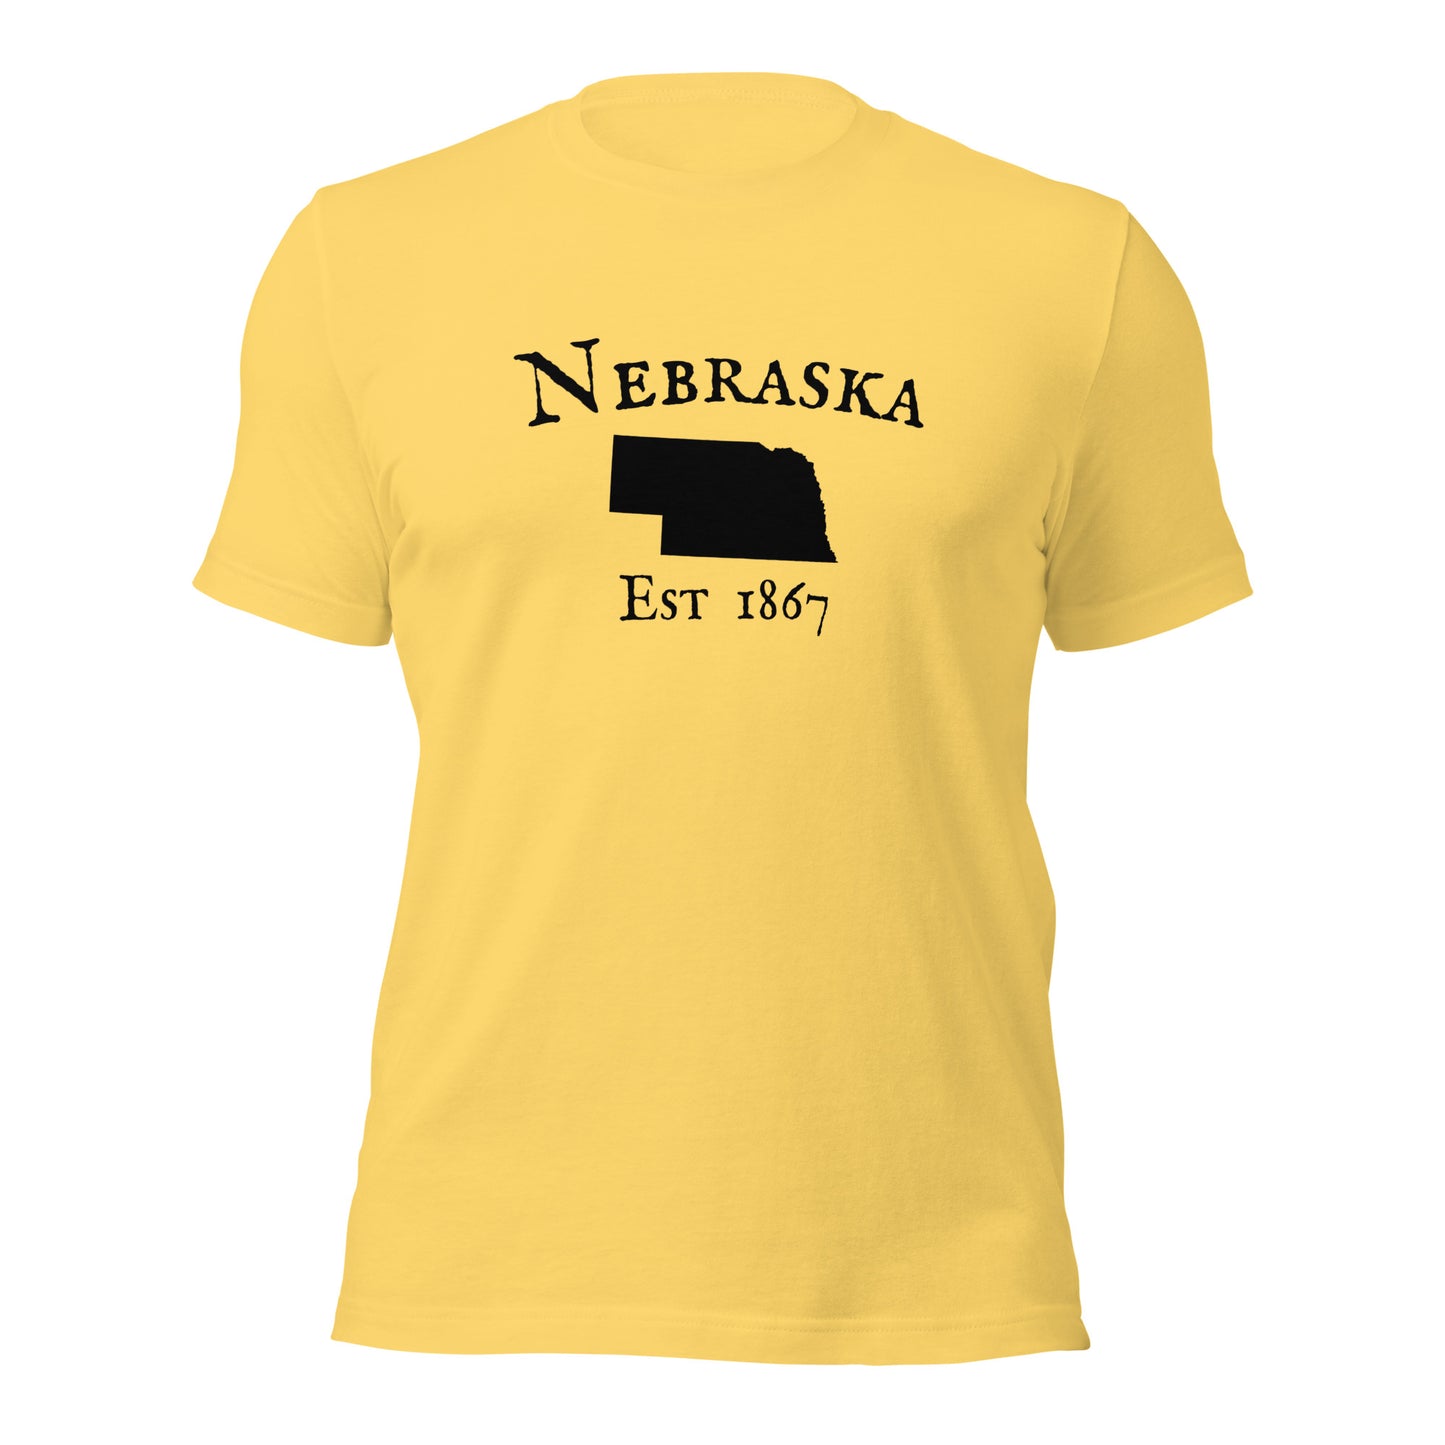 "Nebraska Established In 1867" T-Shirt - Weave Got Gifts - Unique Gifts You Won’t Find Anywhere Else!